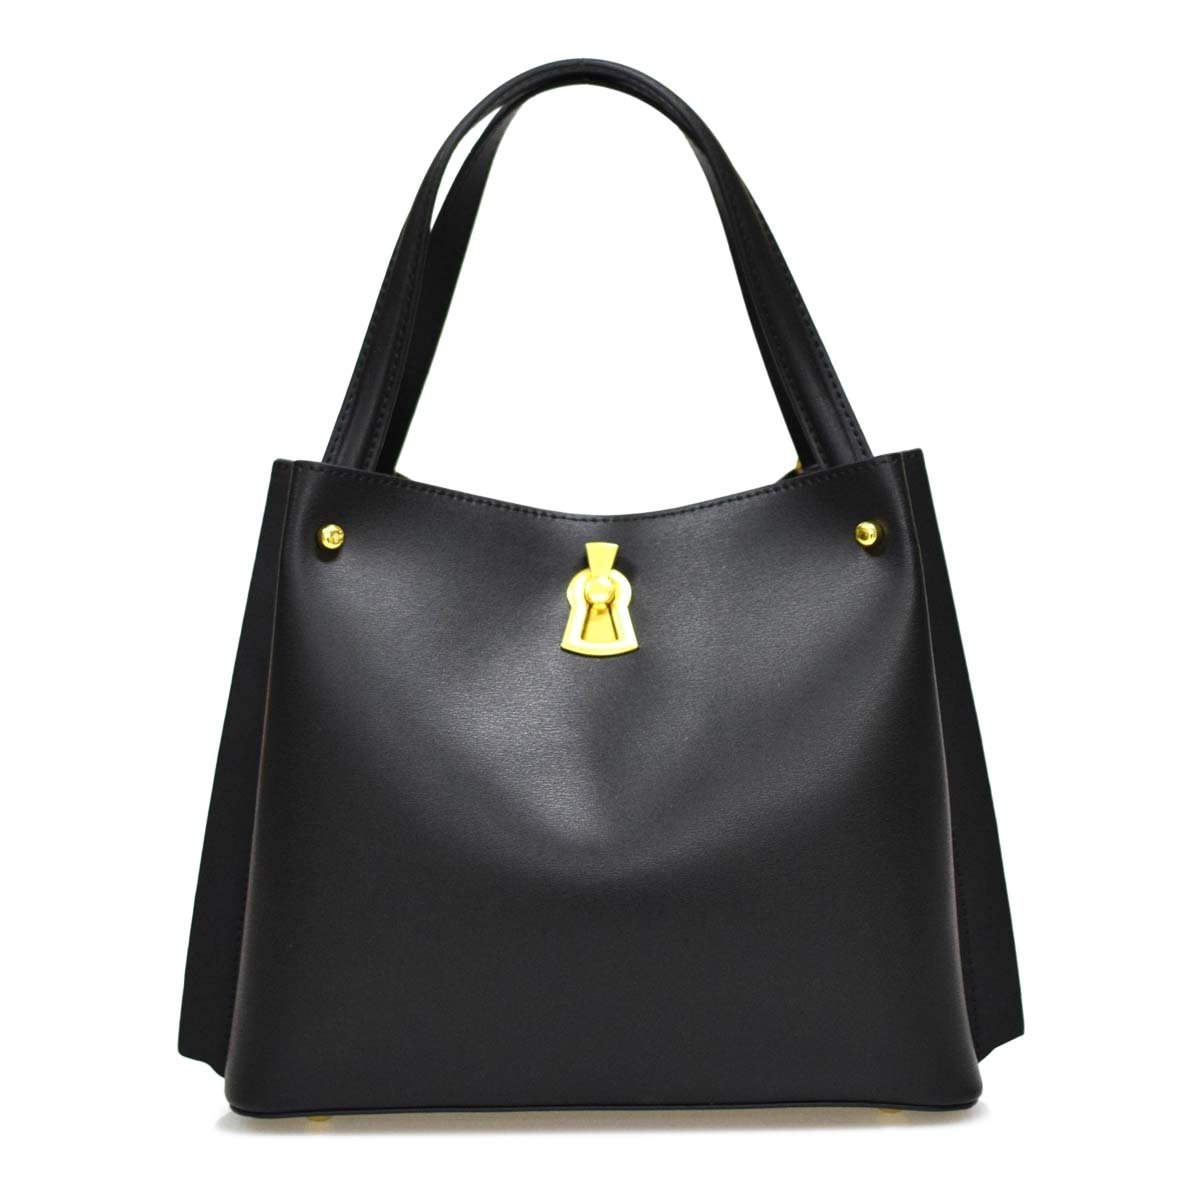 Key Hole Design Leather Handbag